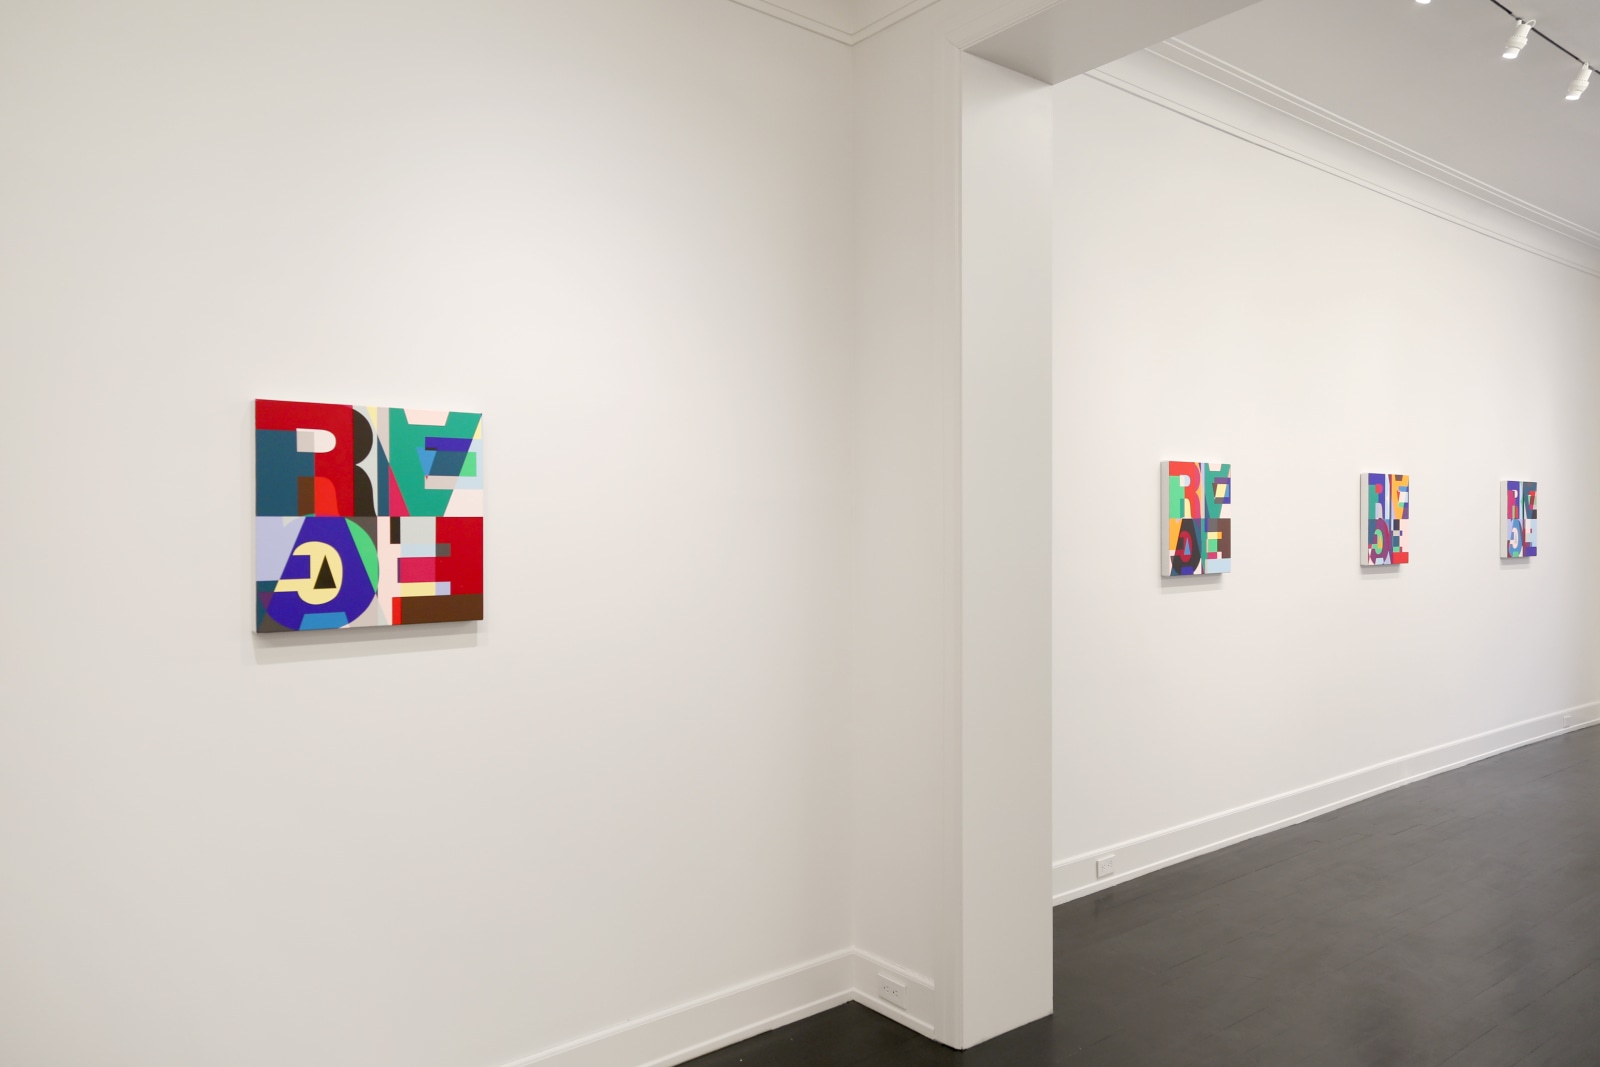 Heimo Zobernig: nework, Petzel Gallery, 2018  Installation view